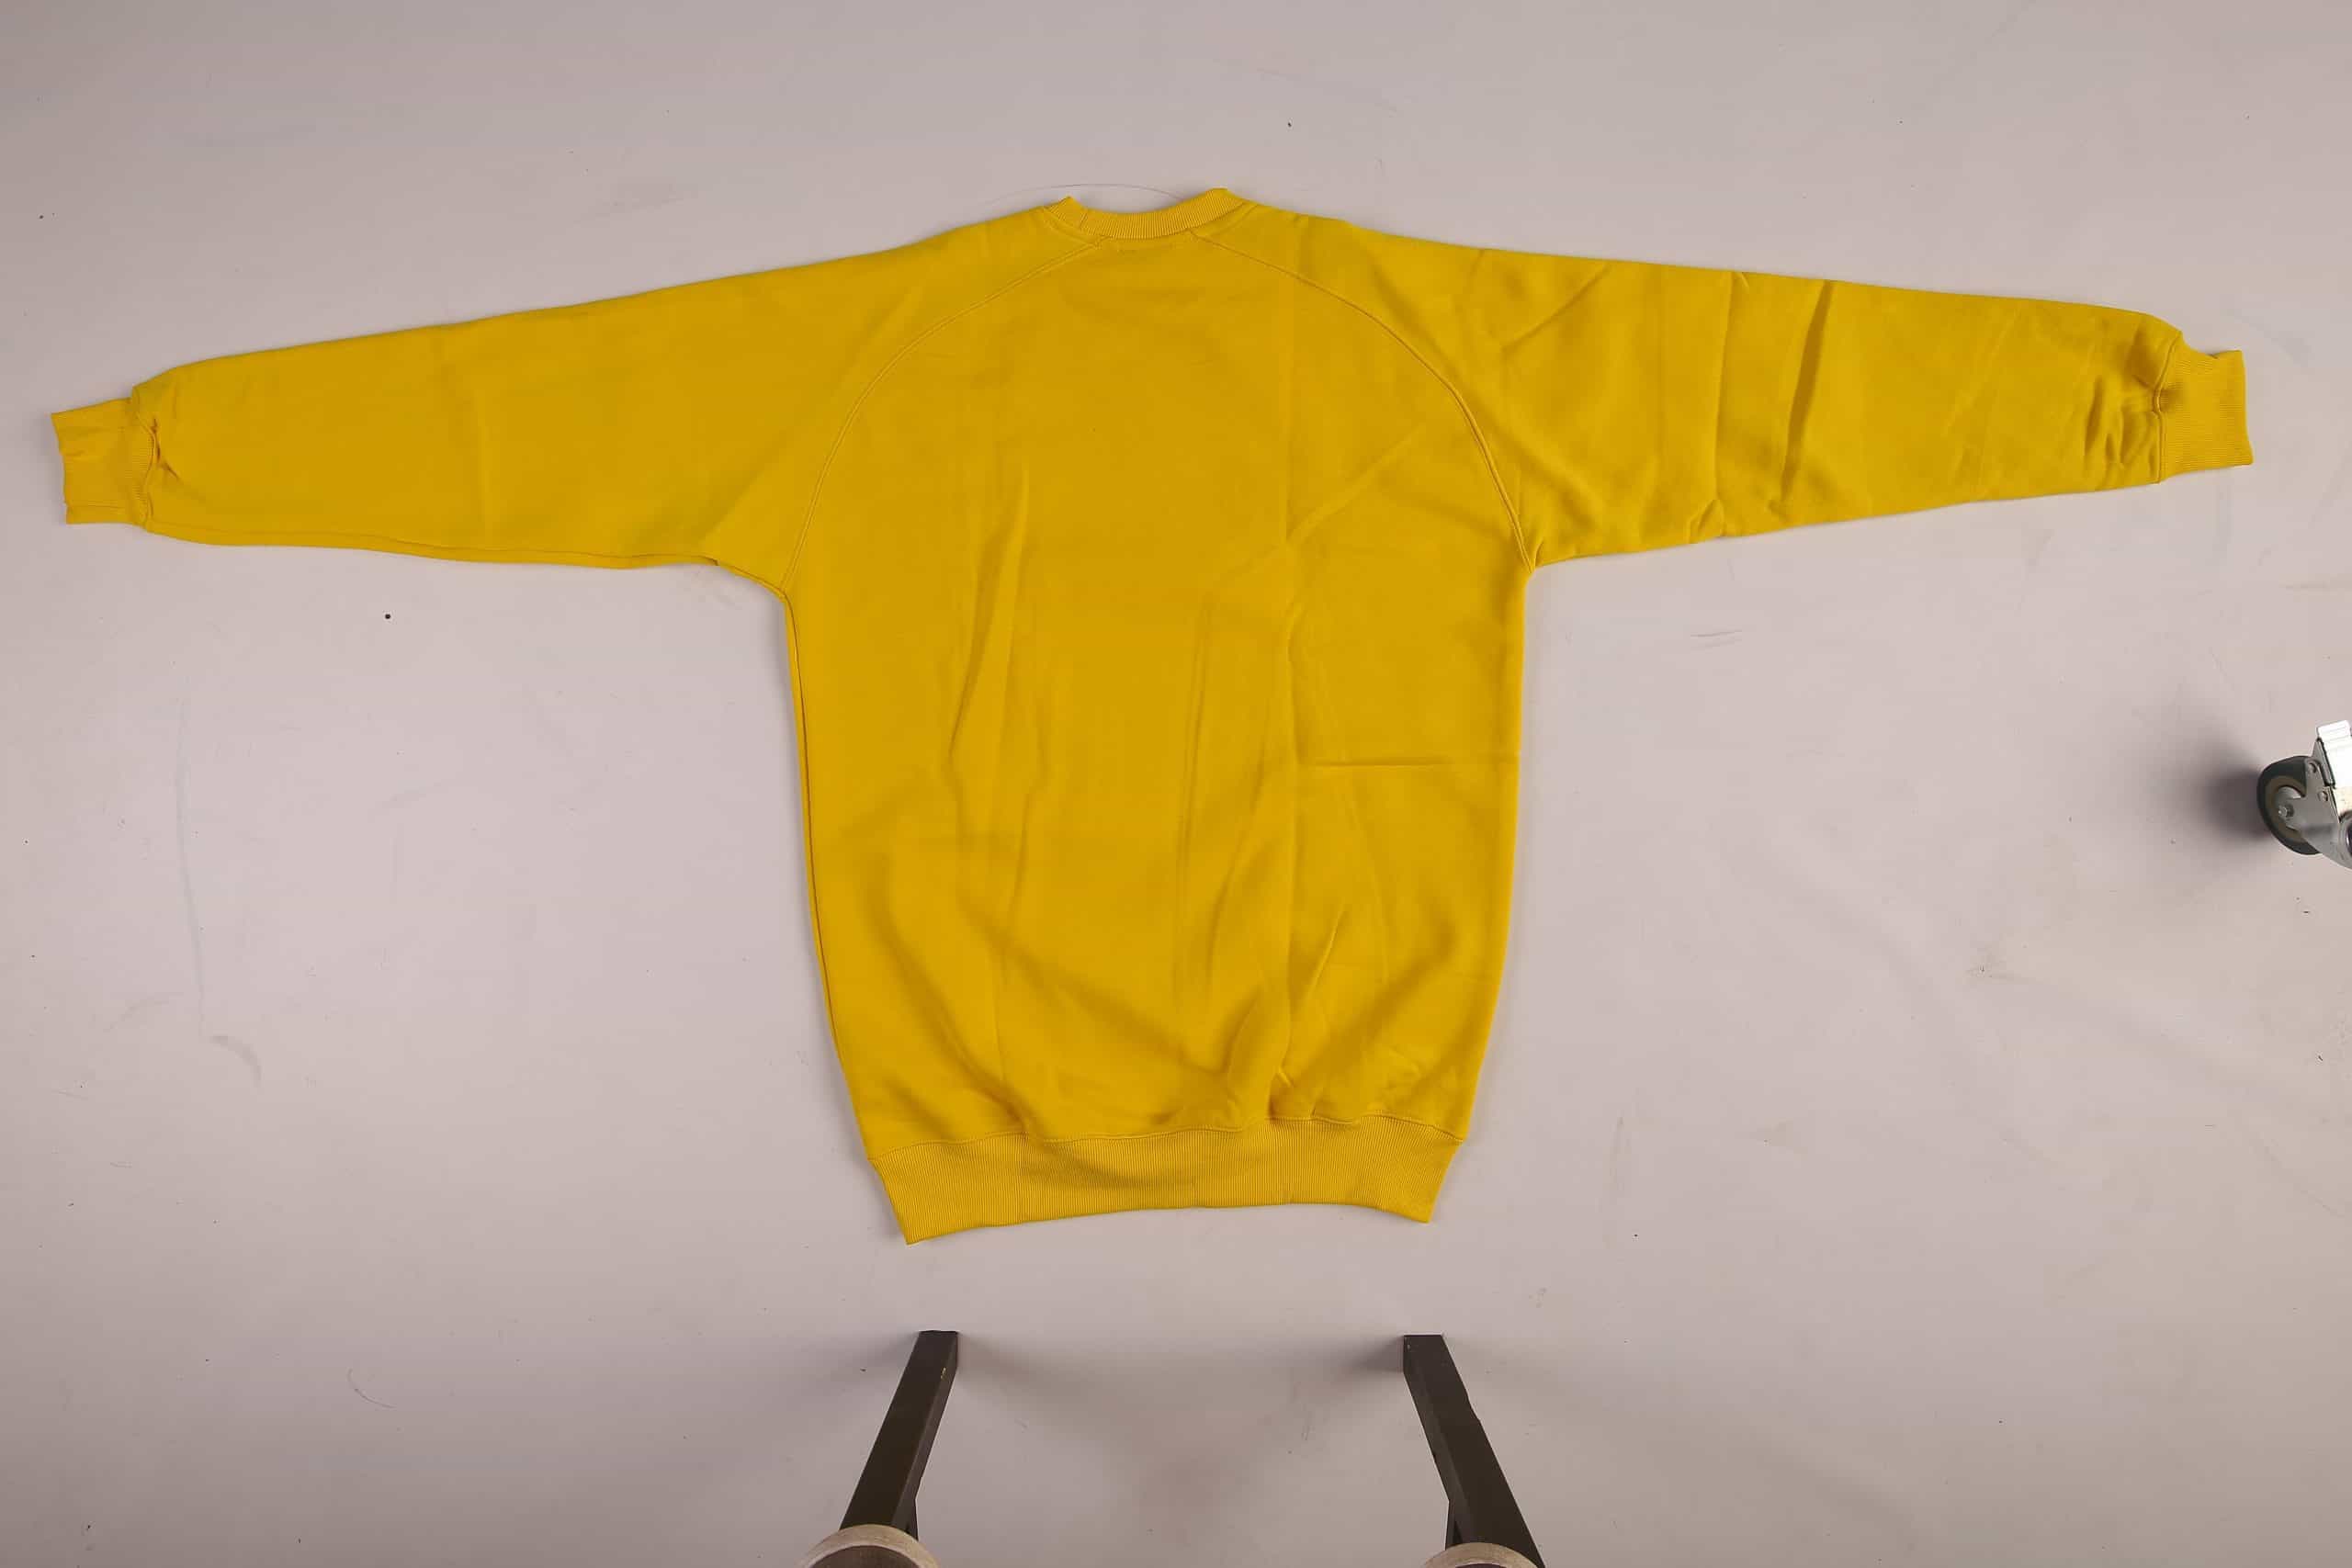 BU1 Sweatshirt gelb #BU1GLOVES